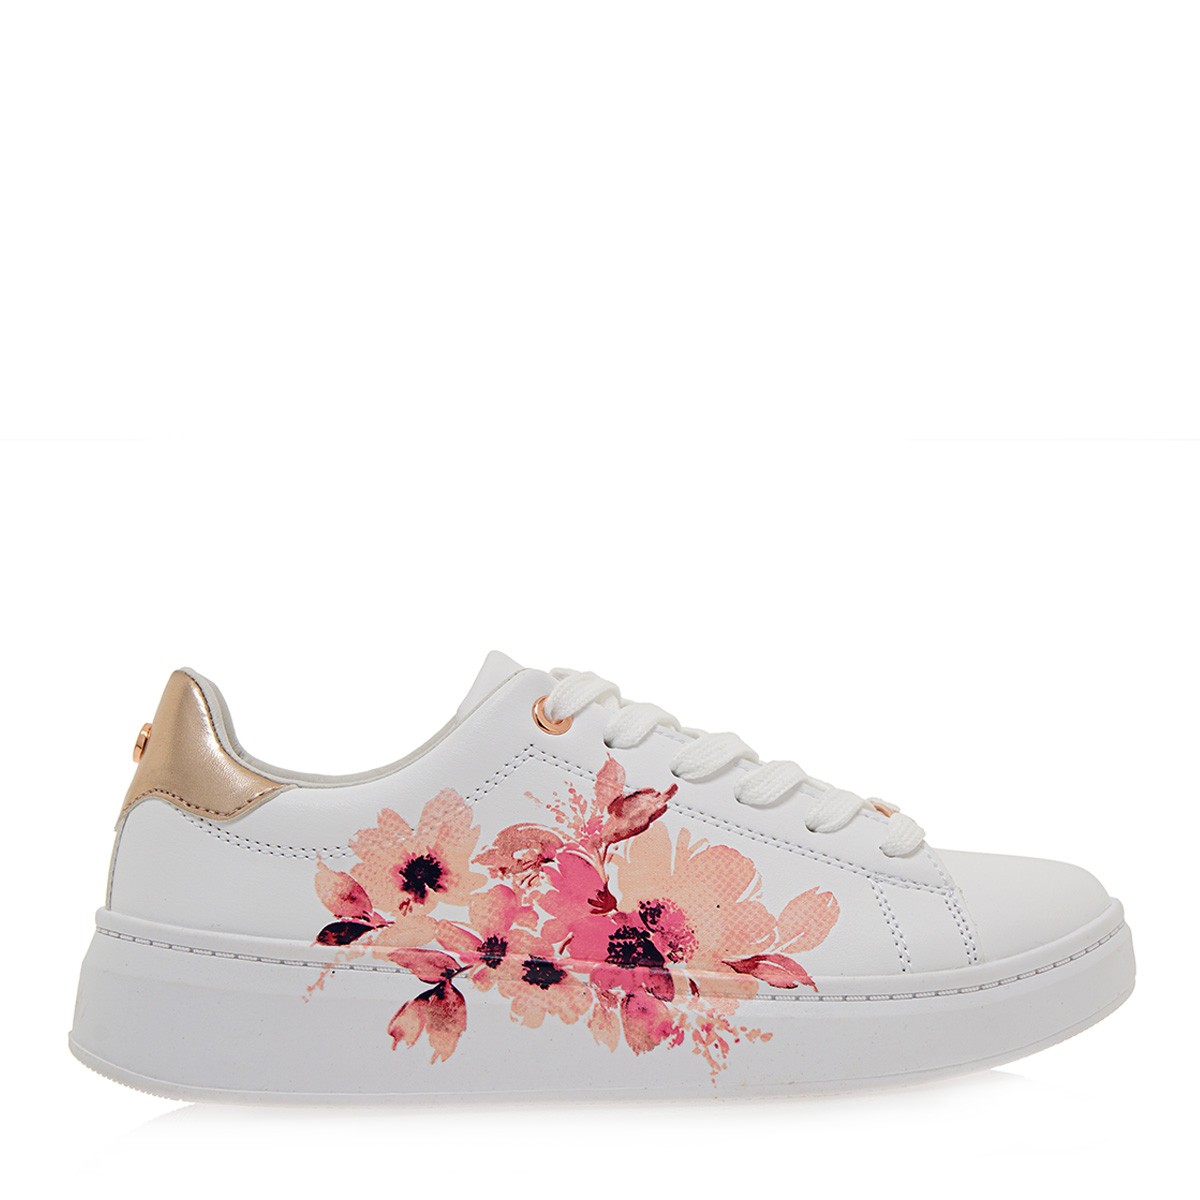 Renato Garini Γυναικεία Παπούτσια Sneakers 219-57Q Λευκό Λουλούδι Ρόζ Χρυσό Q157Q2192X63